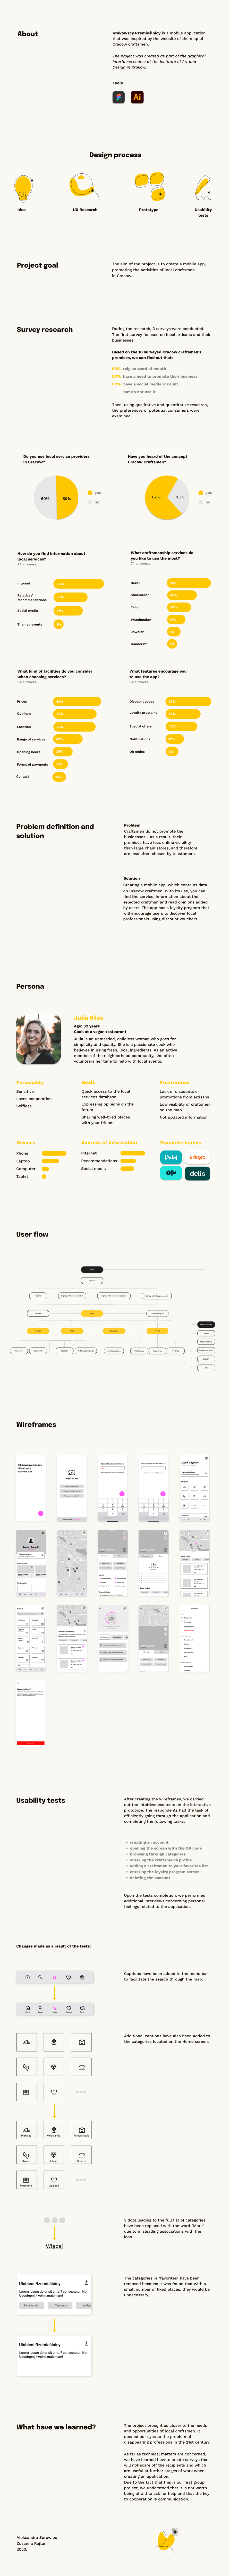 design ux user experience UX design Mobile app Case Study app design krakow crastmen map